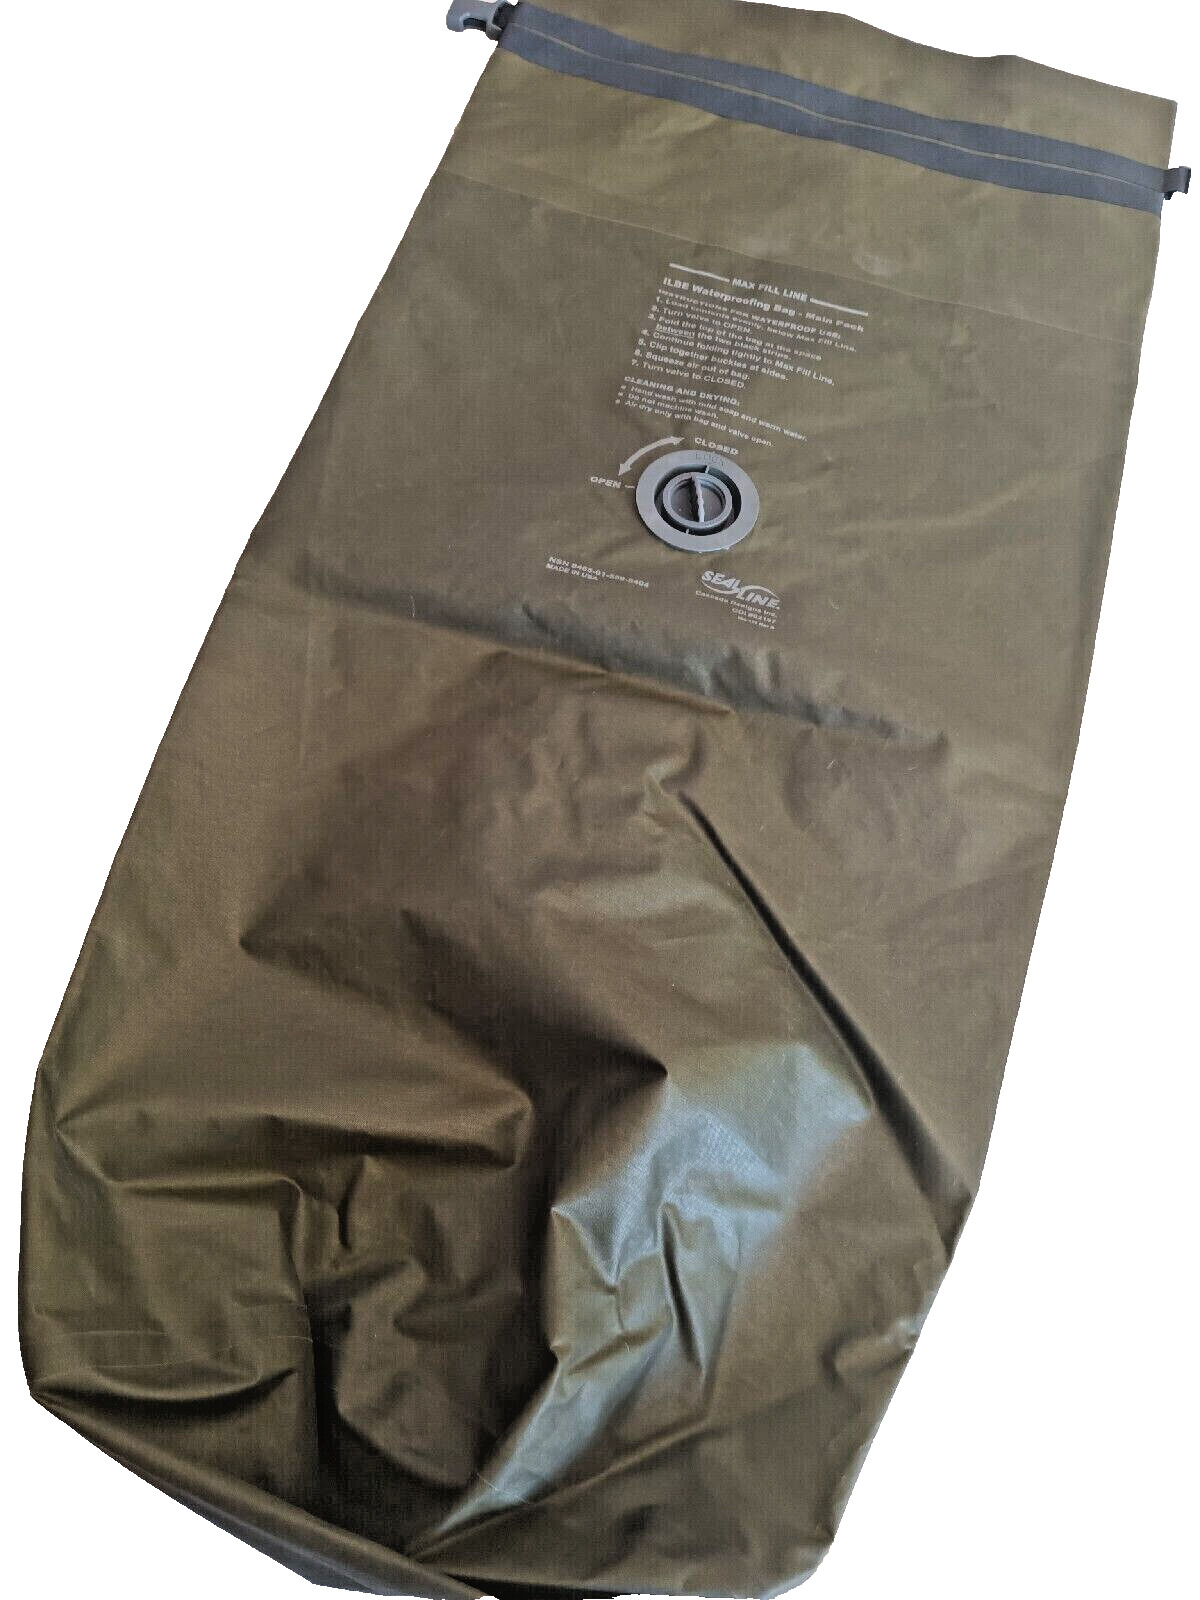 USGI USMC SealLine ILBE WATERPROOF LINER 65L Dry Bag Main Pack New Old Stock